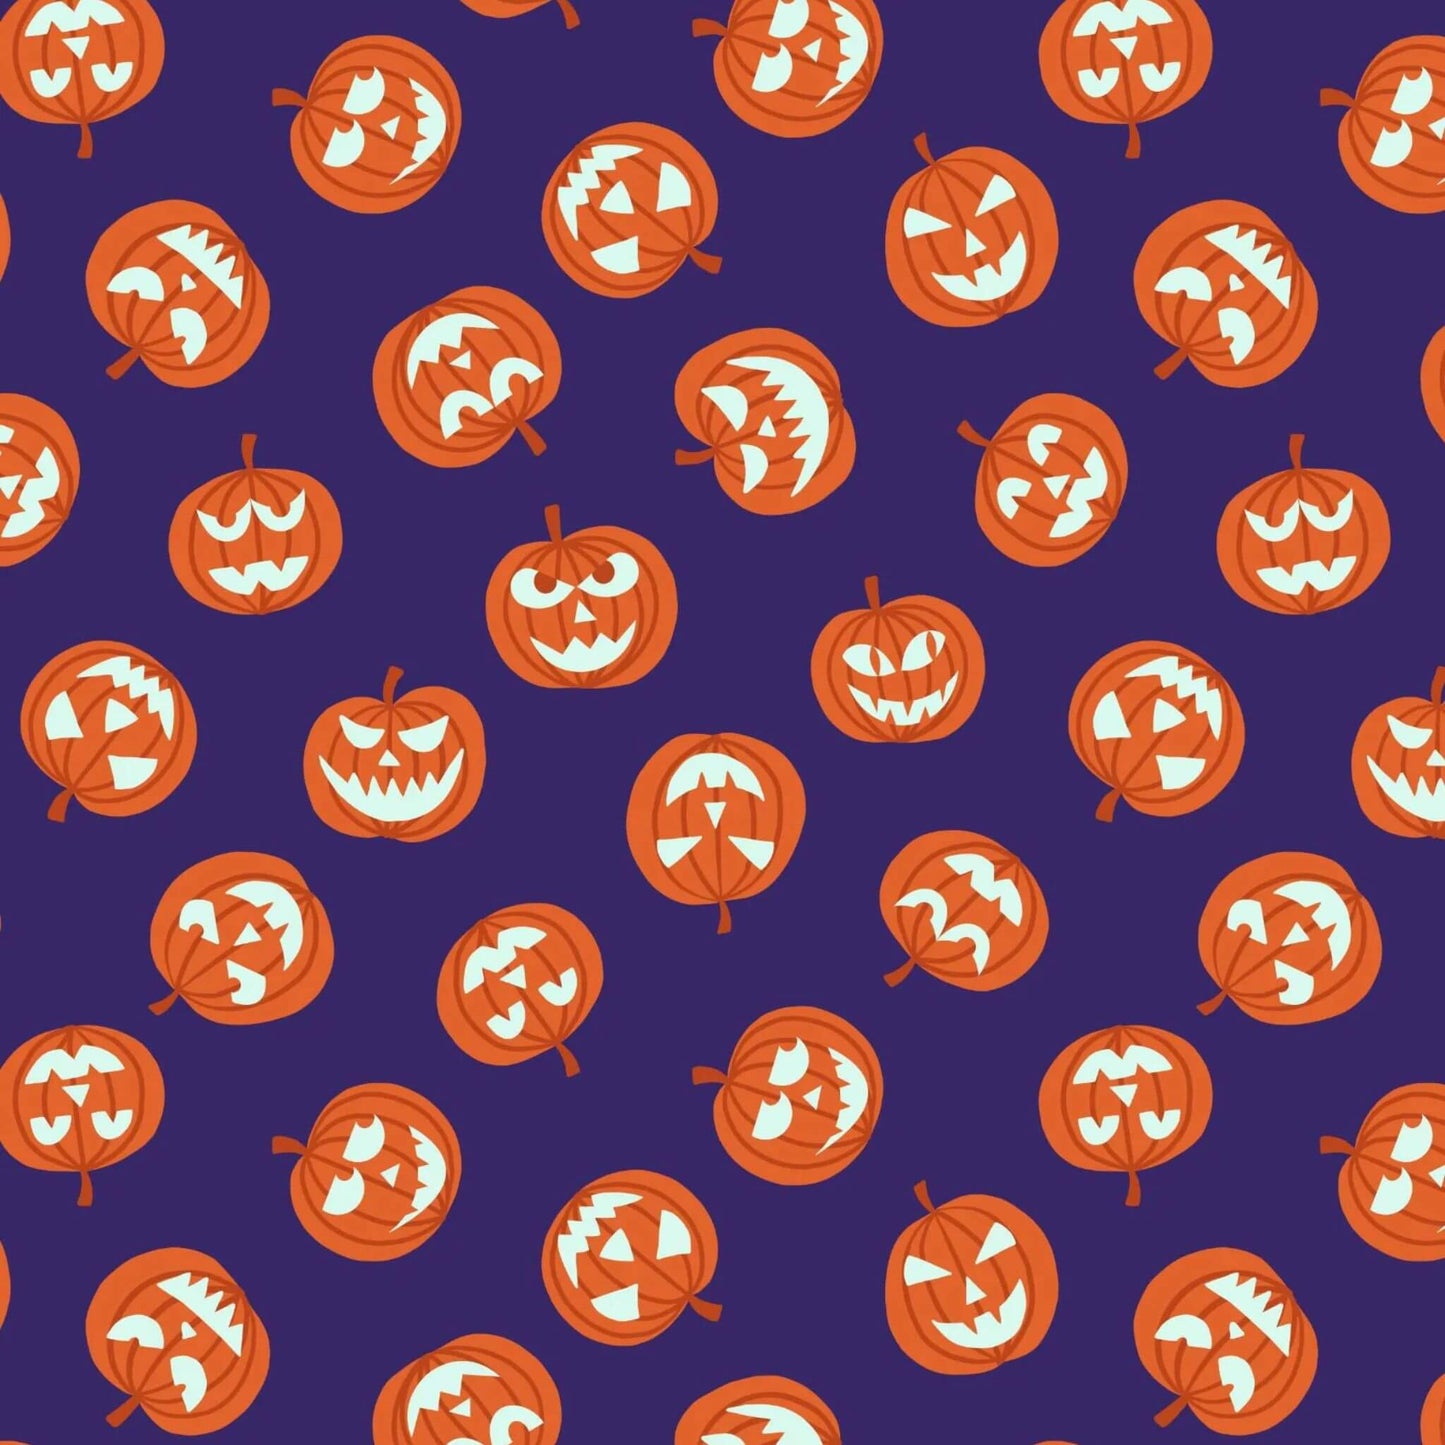 Glow in The Dark Pumpkin Faces - Haunted House Halloween Fabric Range - Lewis and Irene - Purple